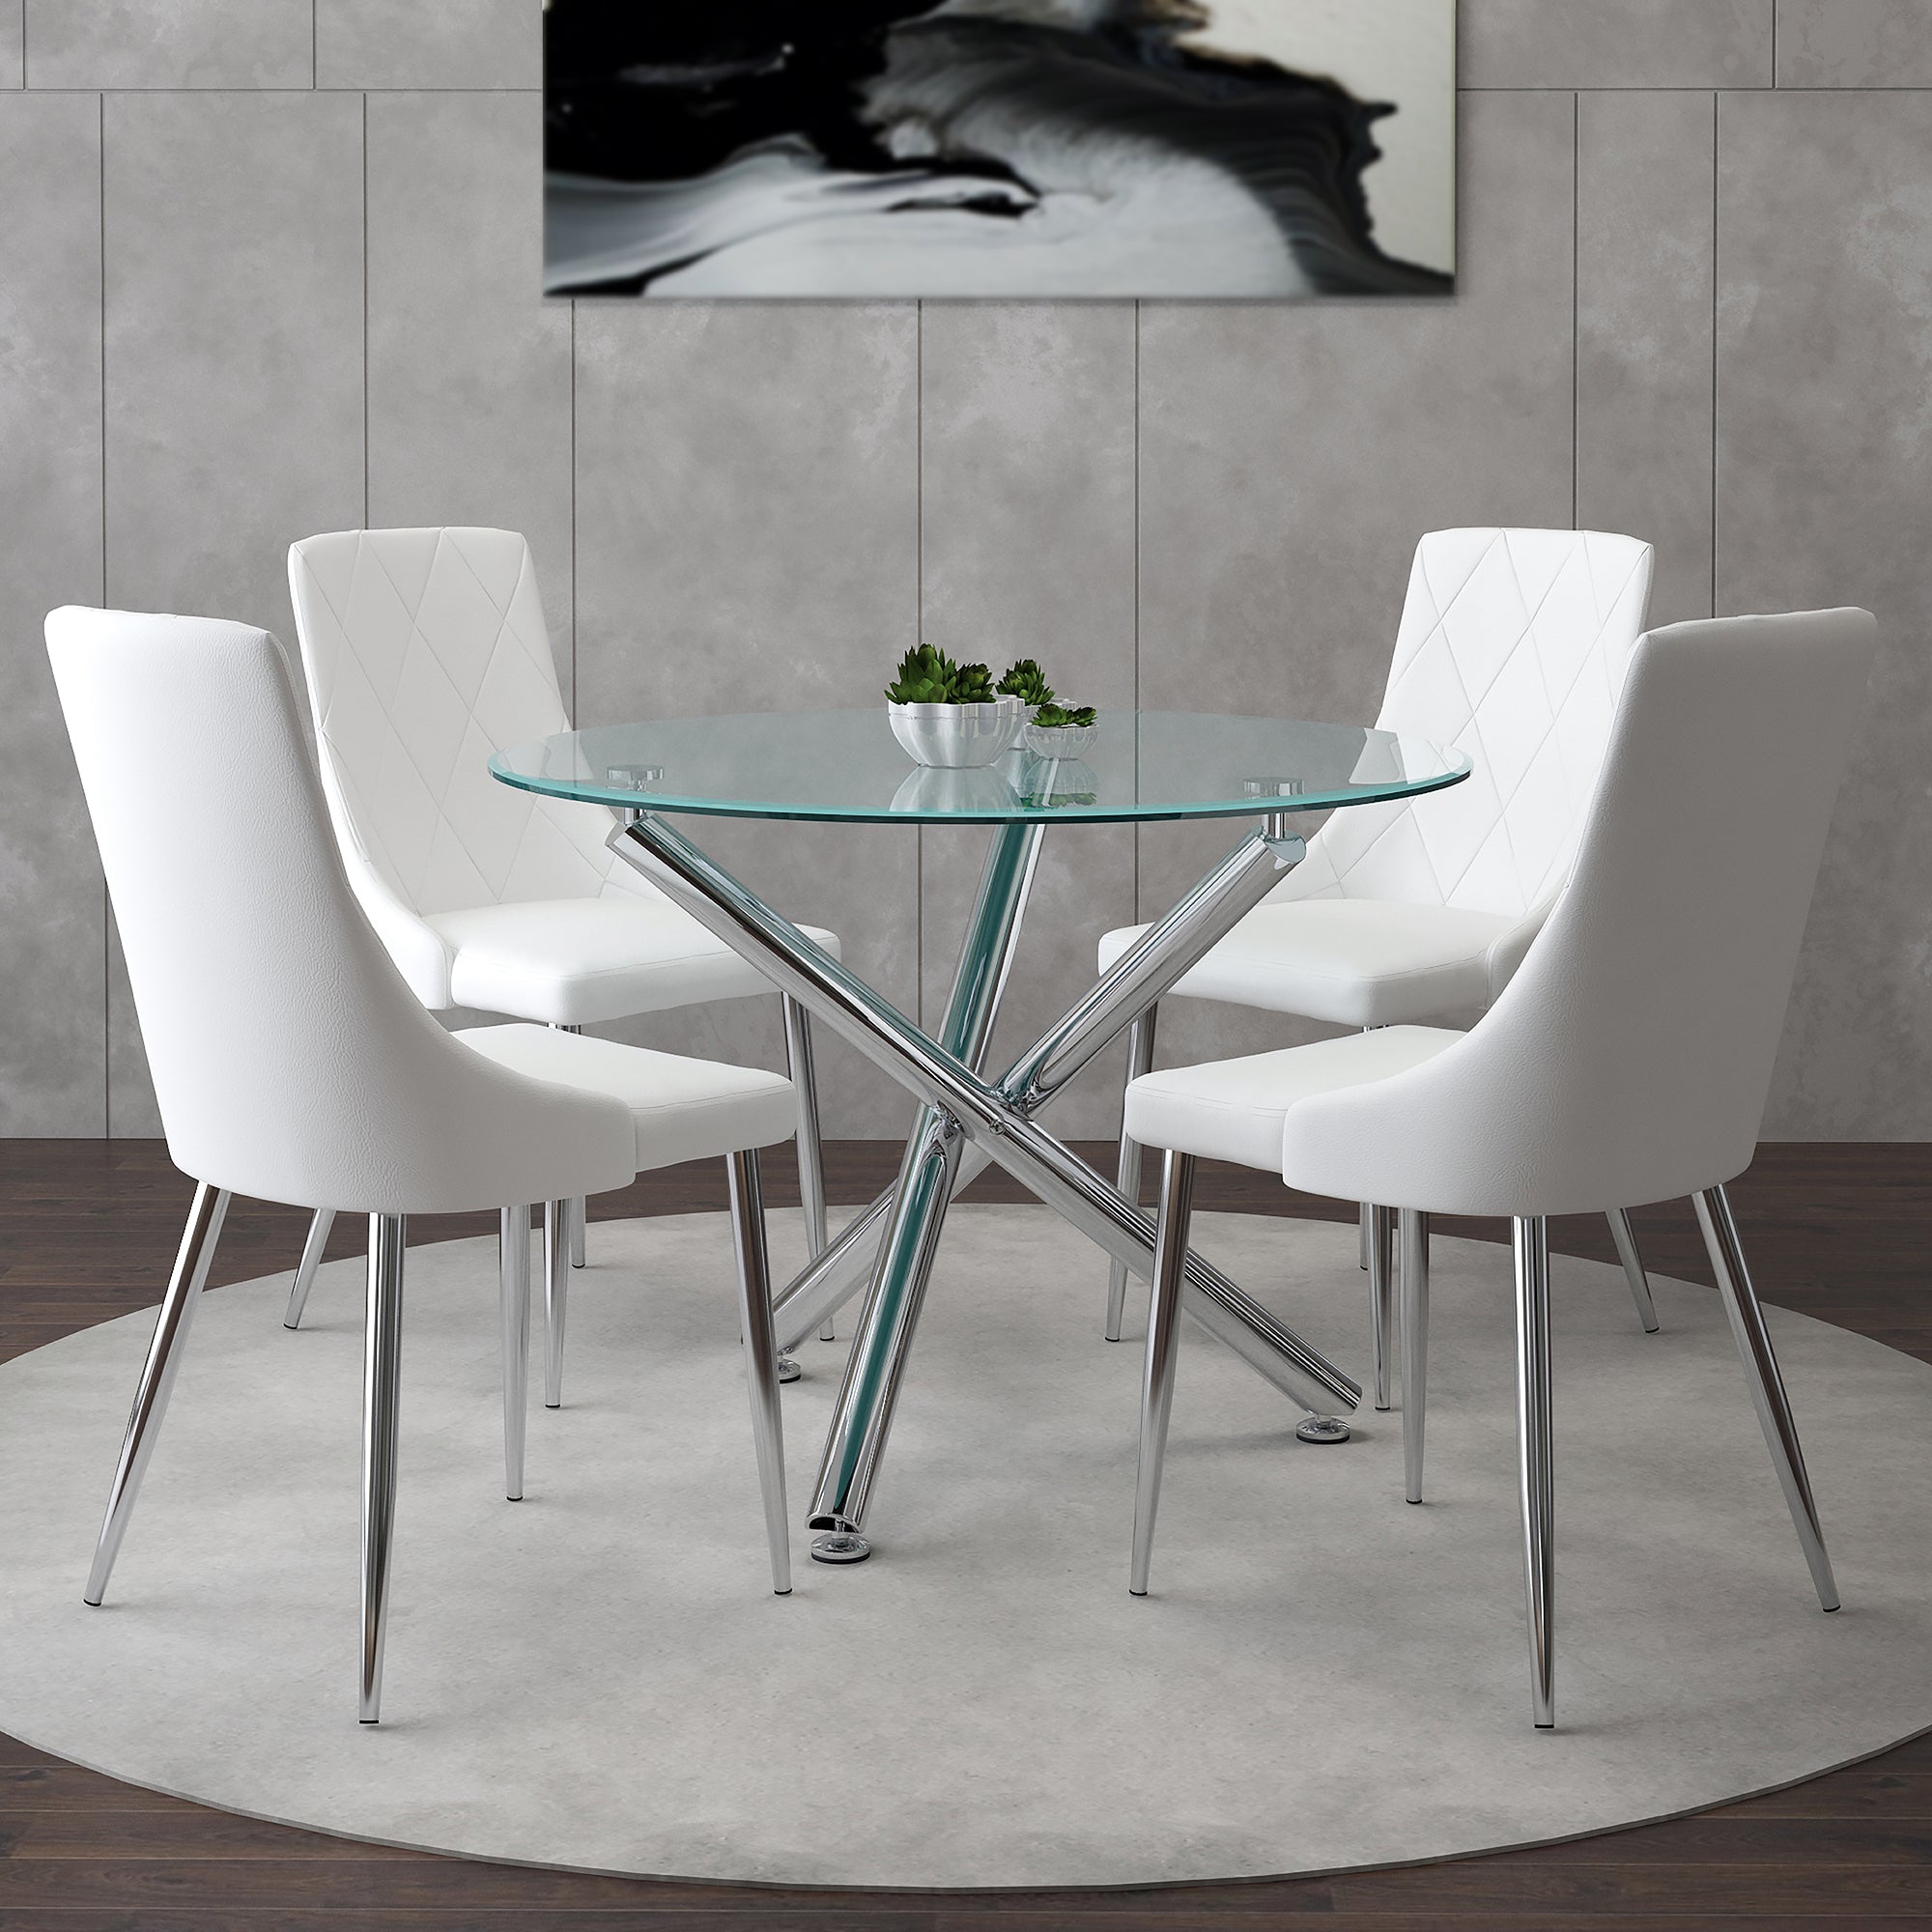 SOLARA II-DINING TABLE, 40"DIA - CHROME / DEVO WHITE CHAIRS - 5PC DINING SET